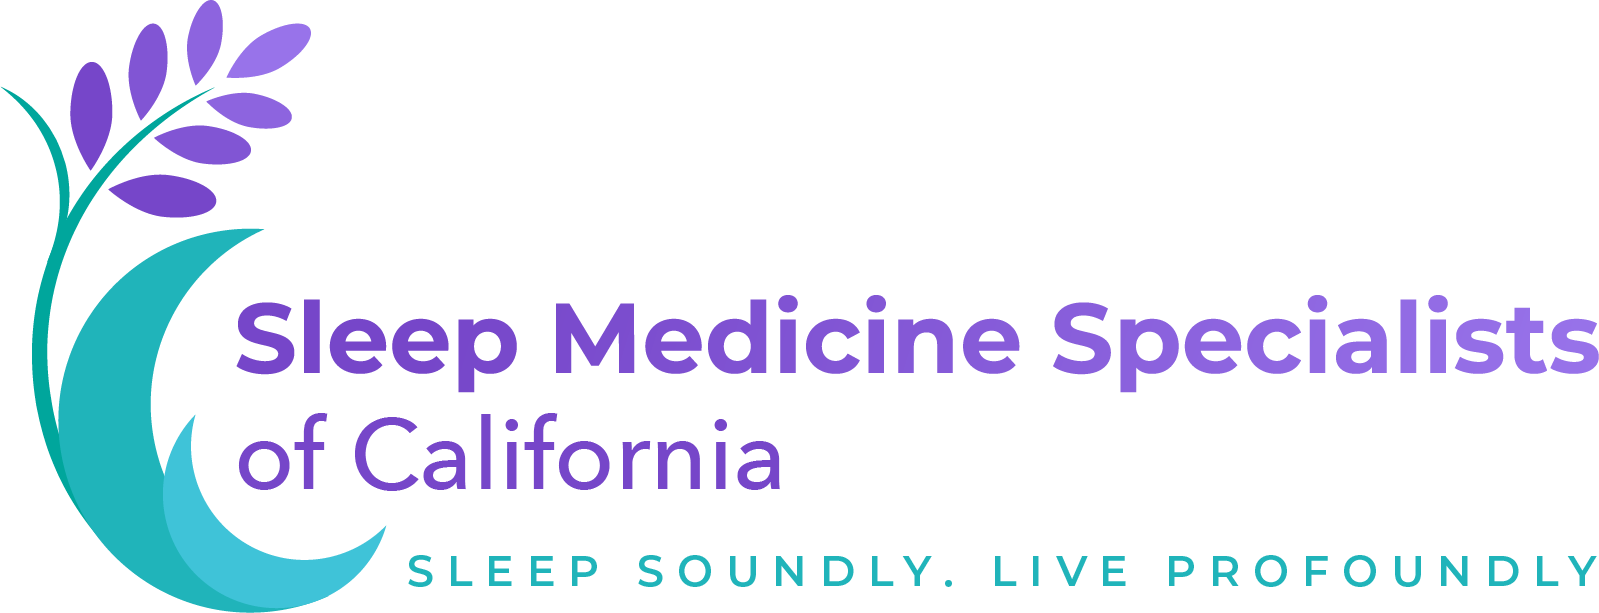 Sleep Medicine Specialists of California